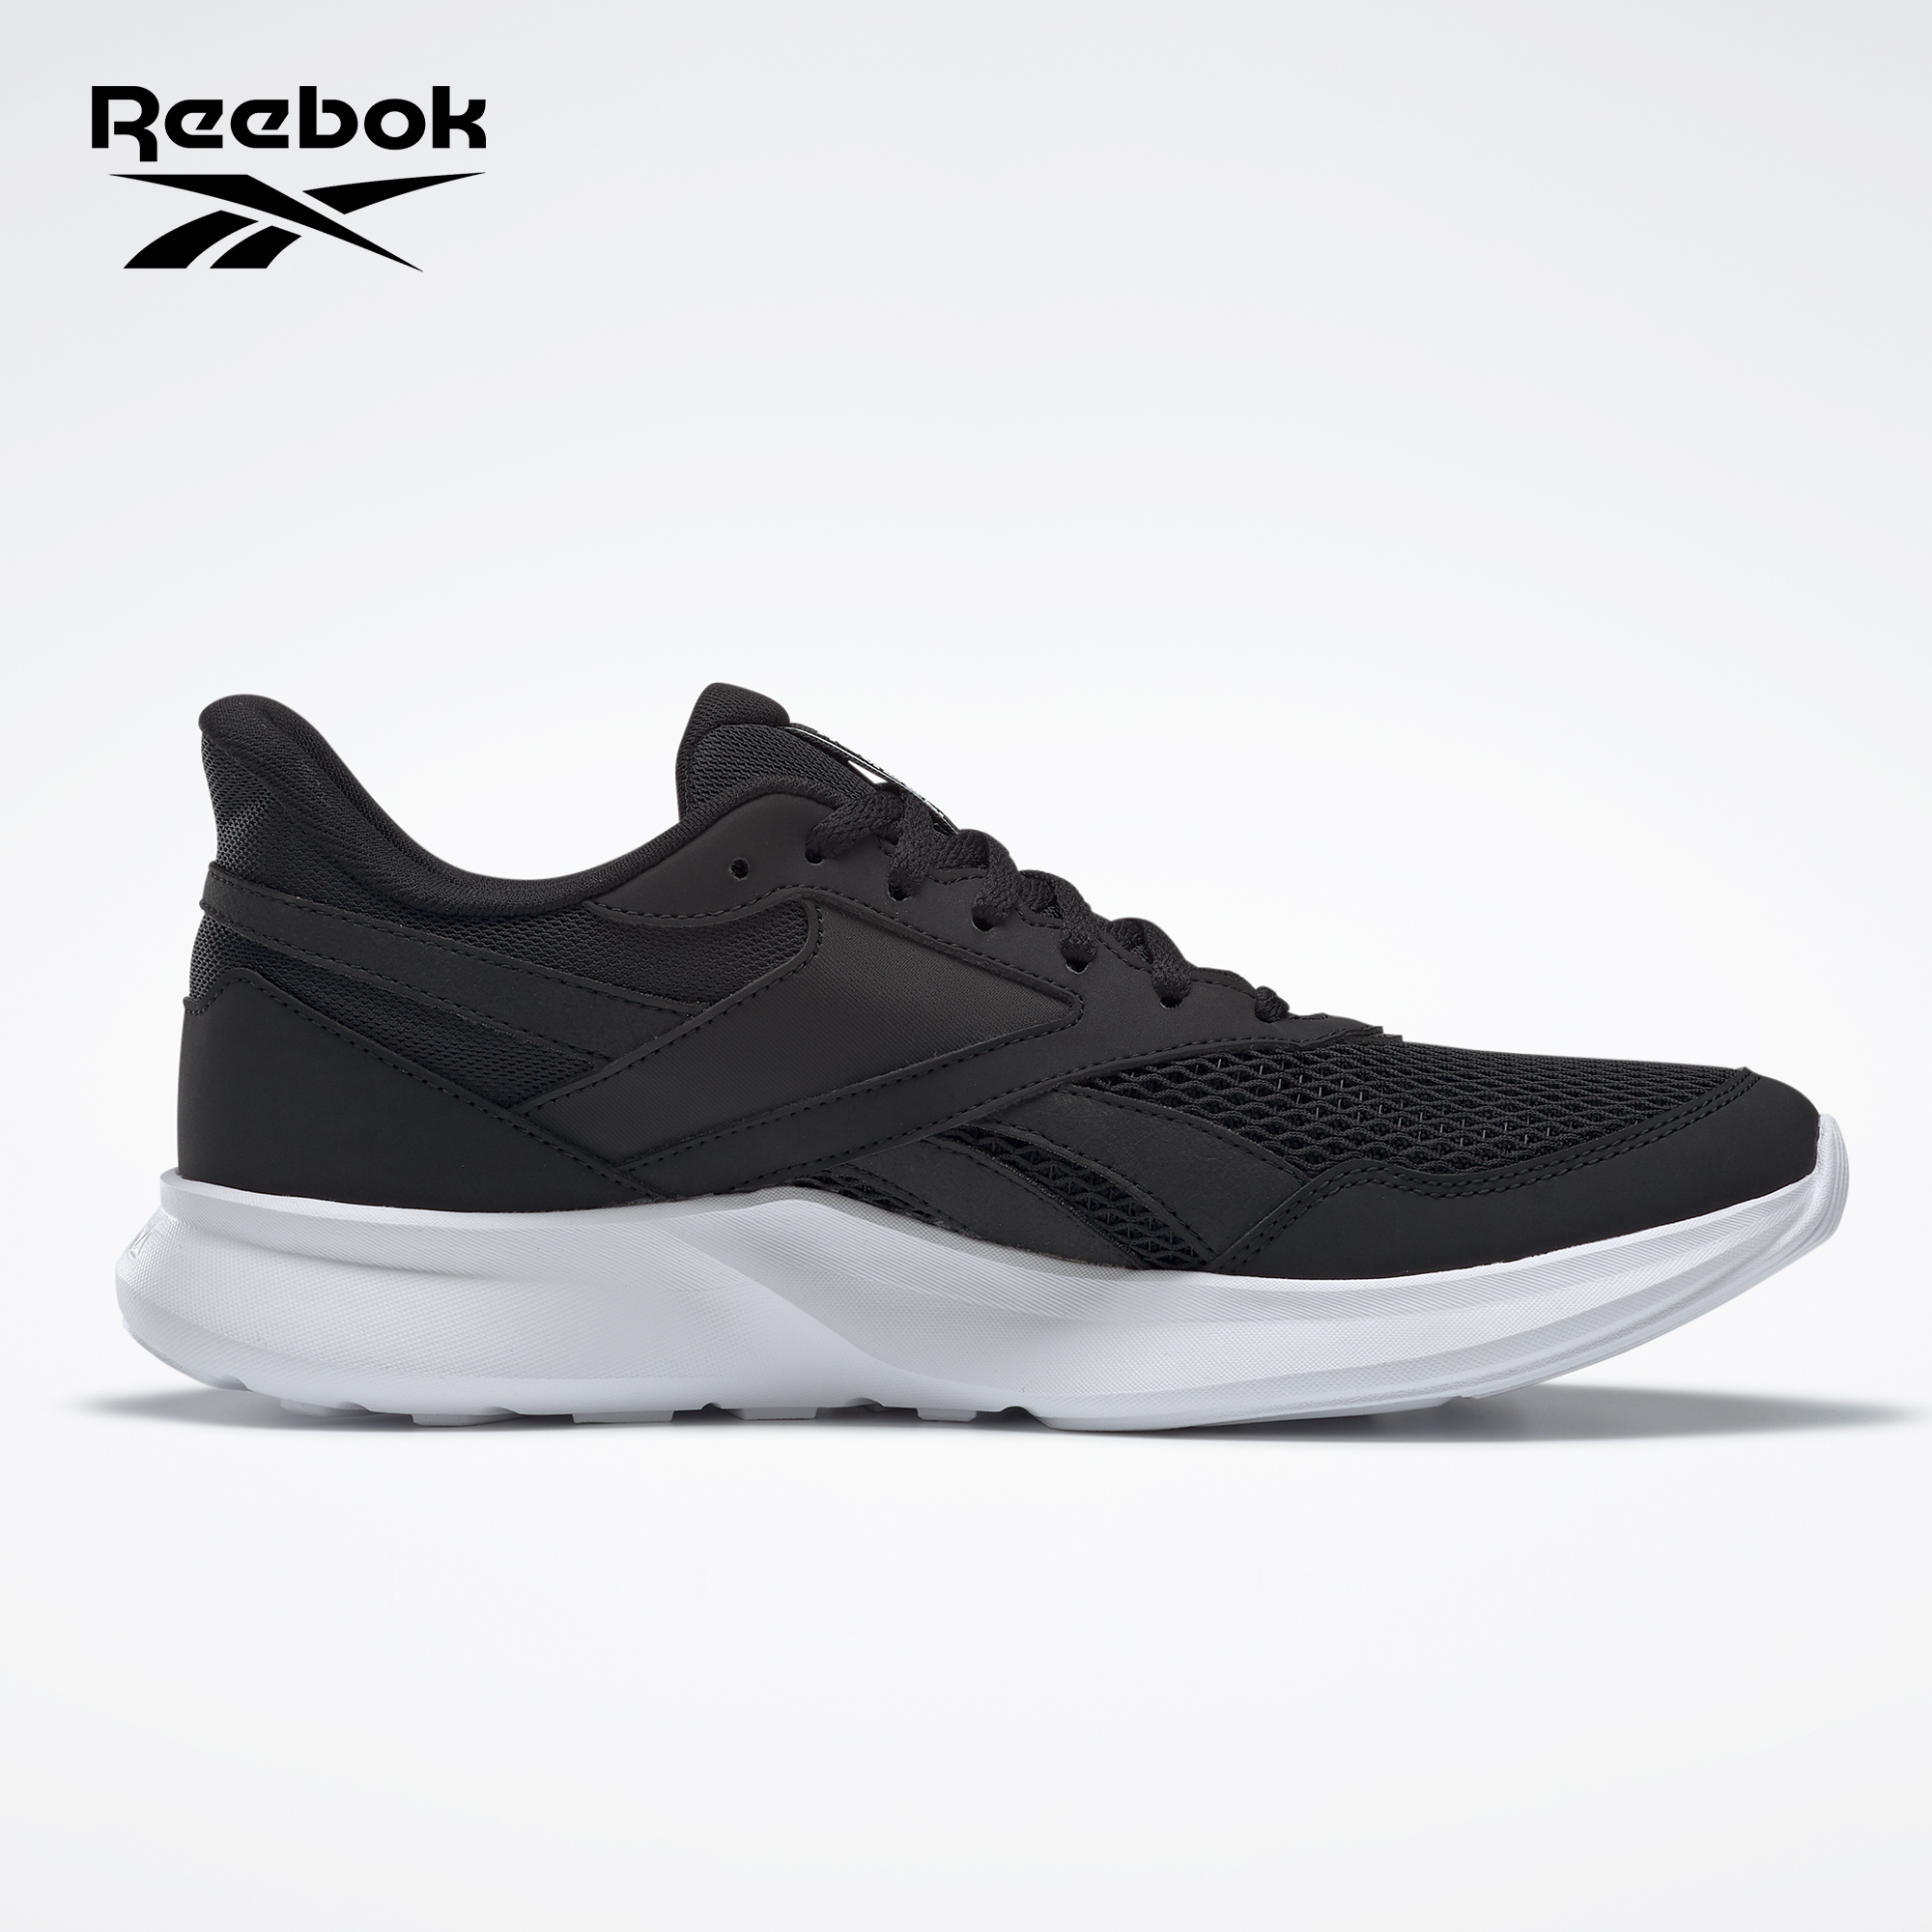 Reebok Running Shoes Online | lazada.com.ph